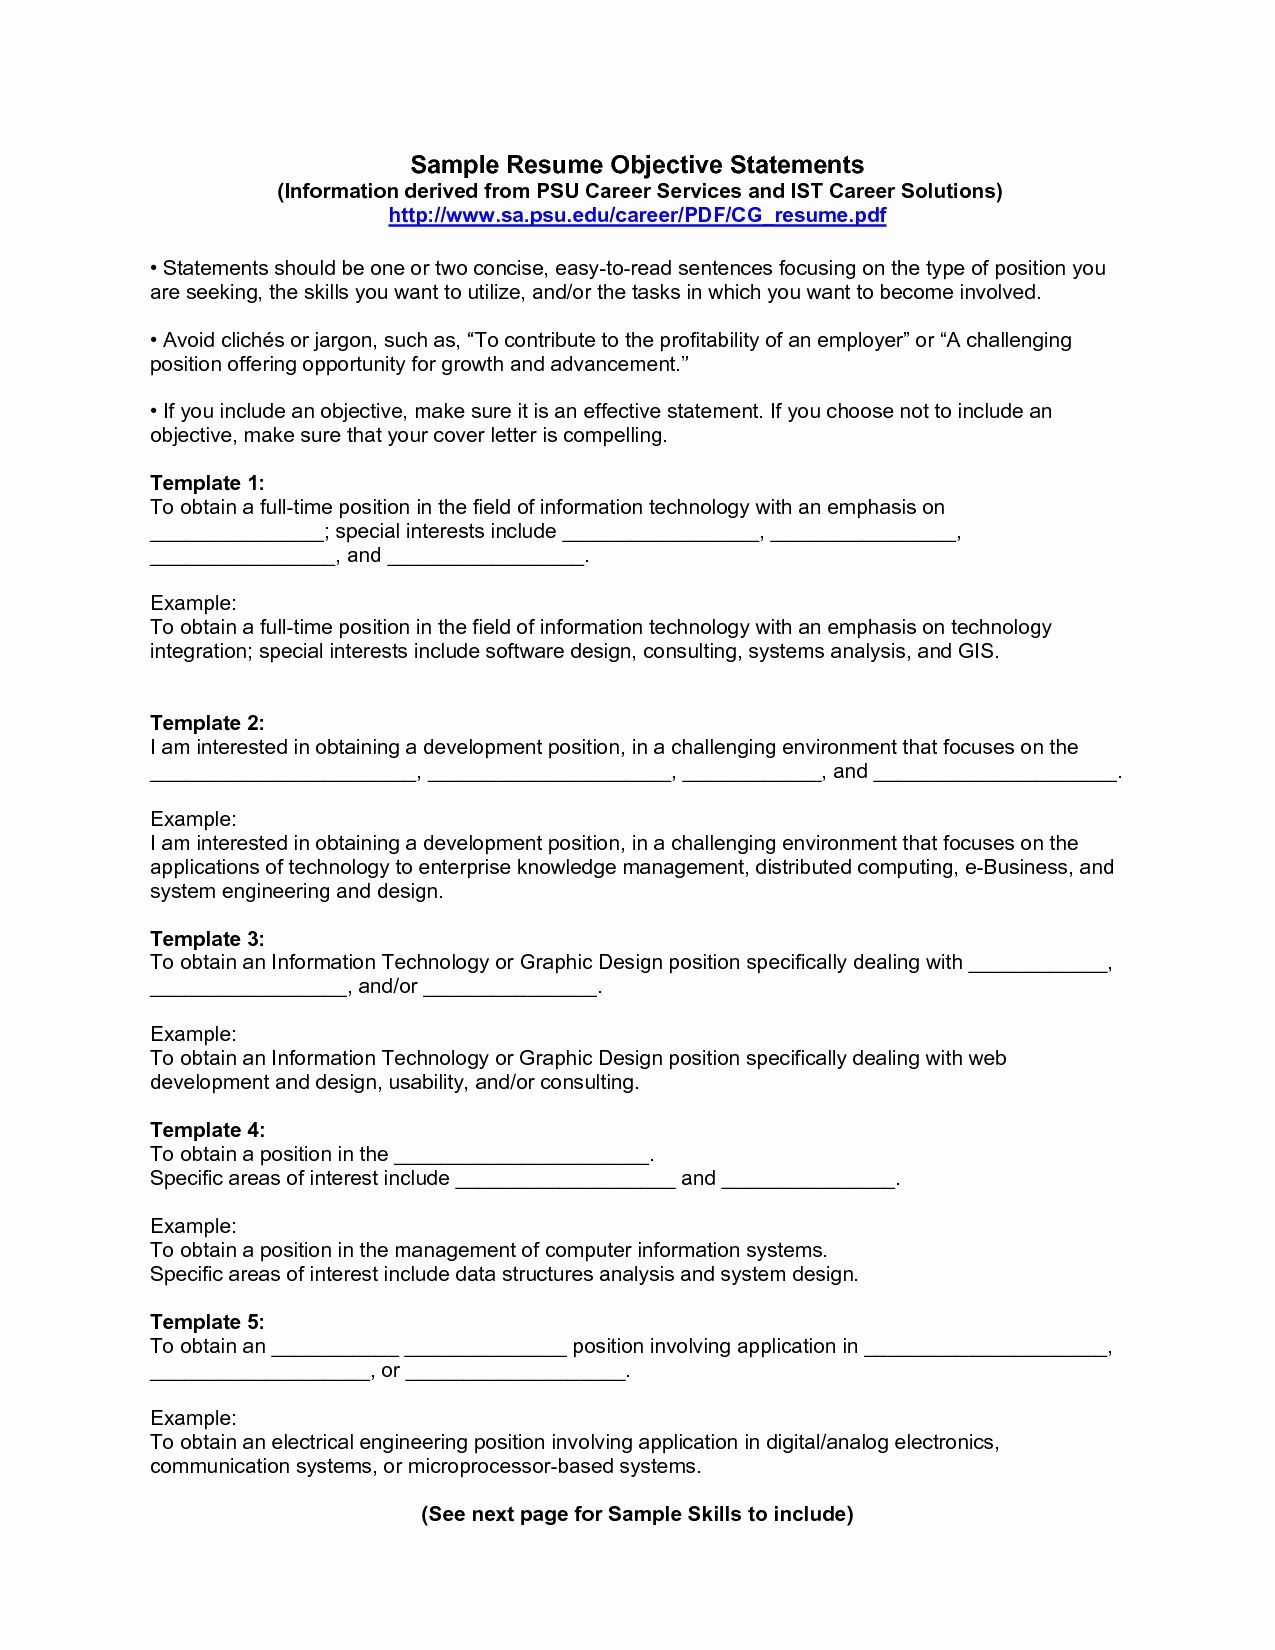 10 Sample Resume Objective Statements